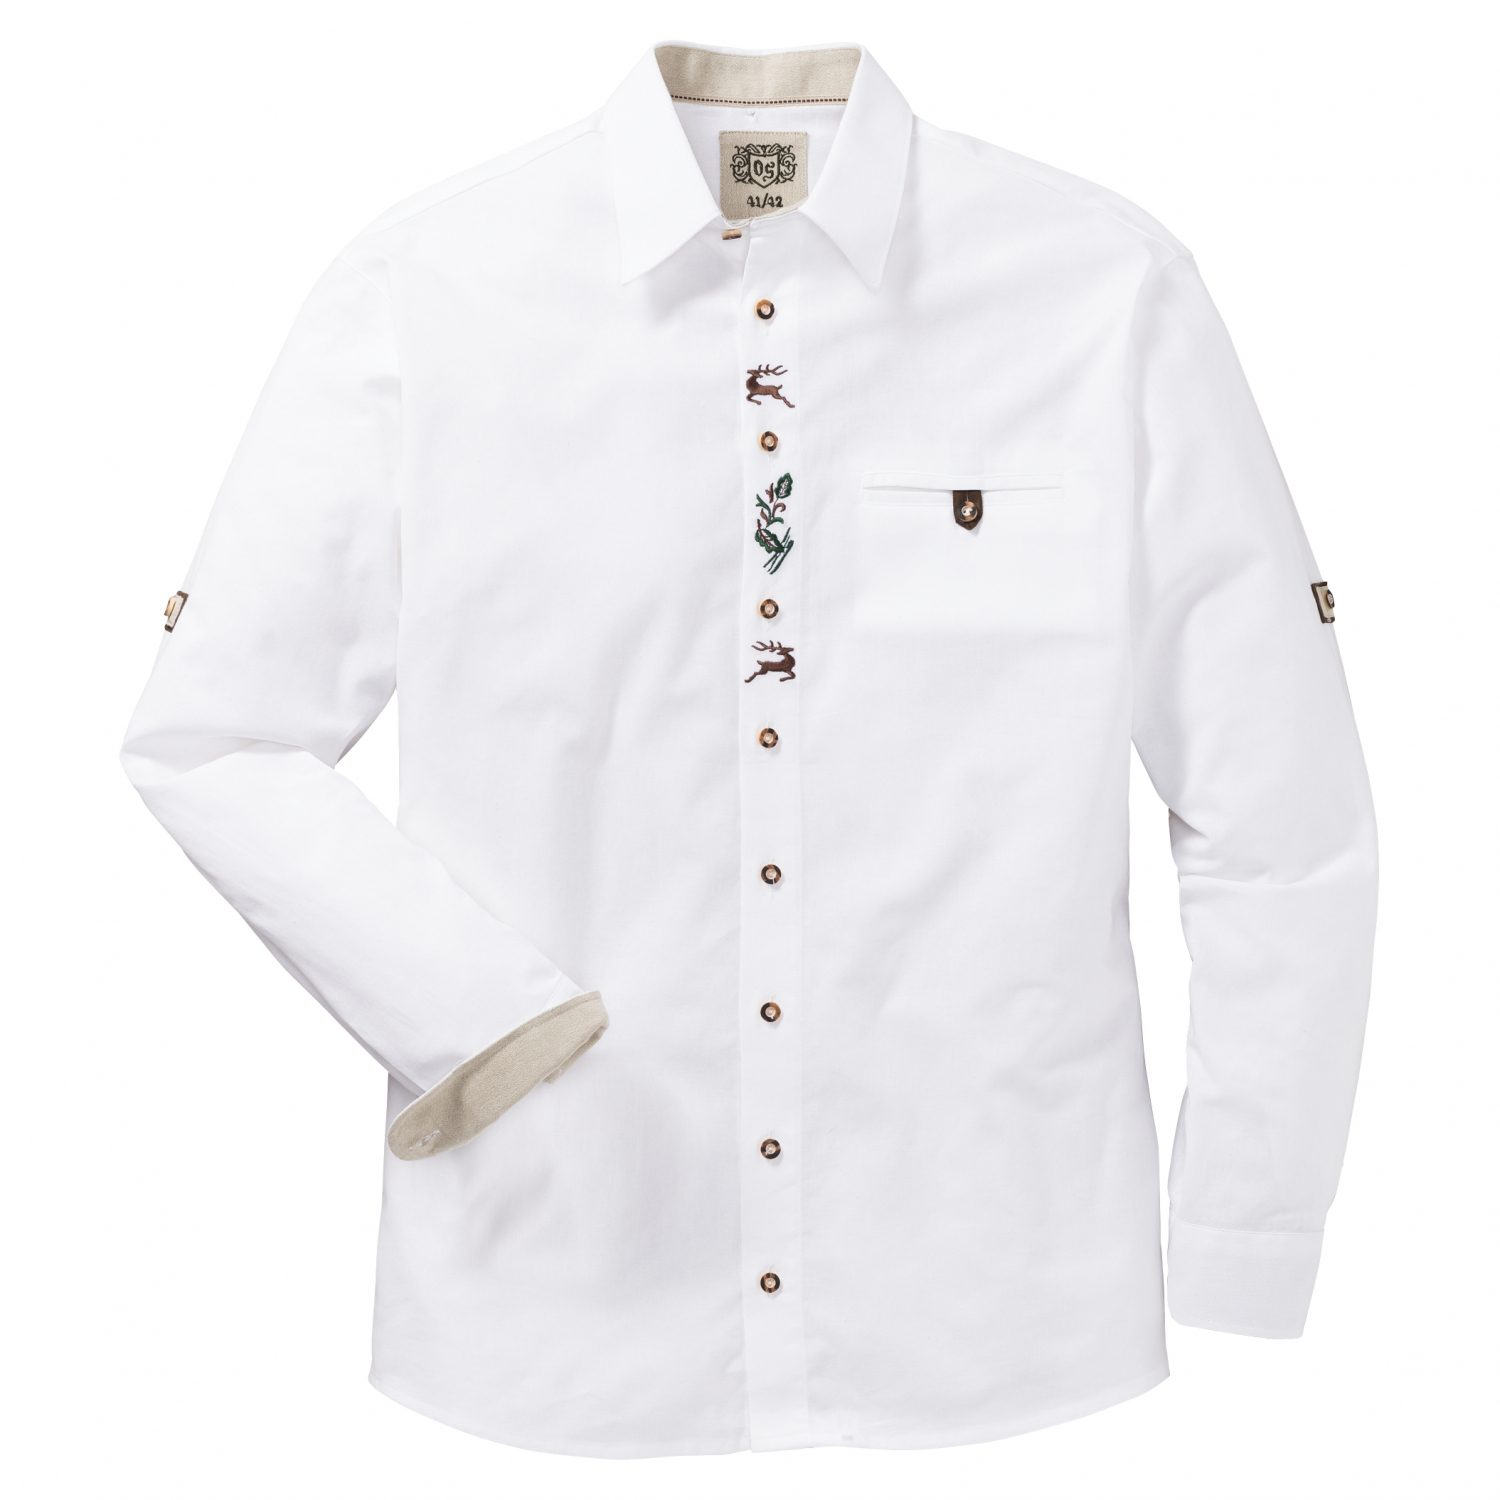 OS Trachten OS Trachten long sleeve shirt with embroidery 